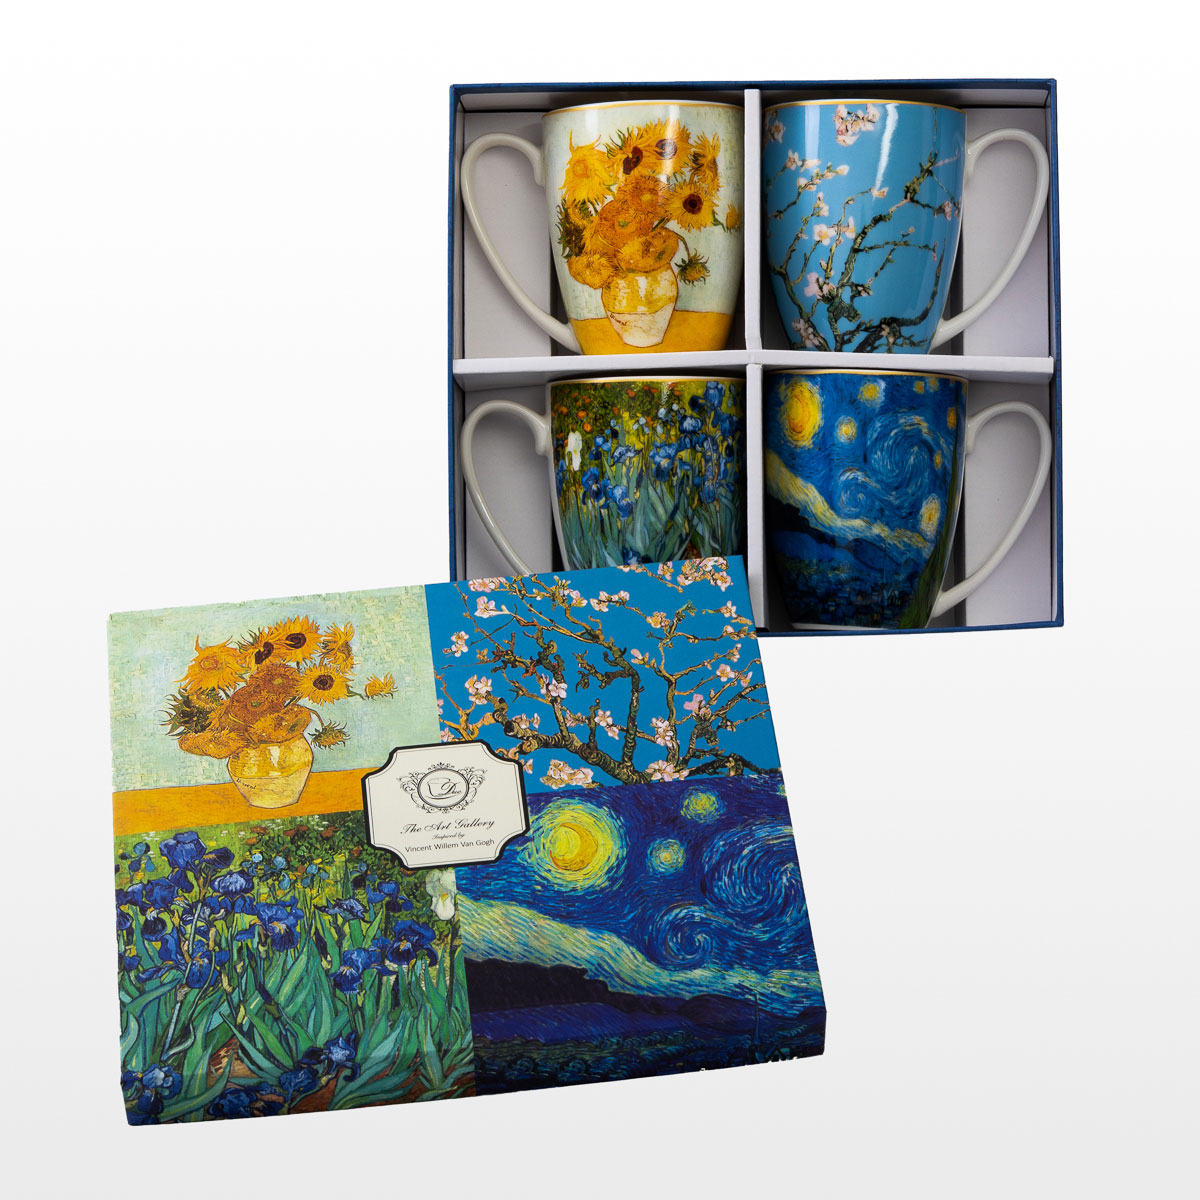 4 tazze Vincent Van Gogh (in una scatola regalo), dettaglio n°2